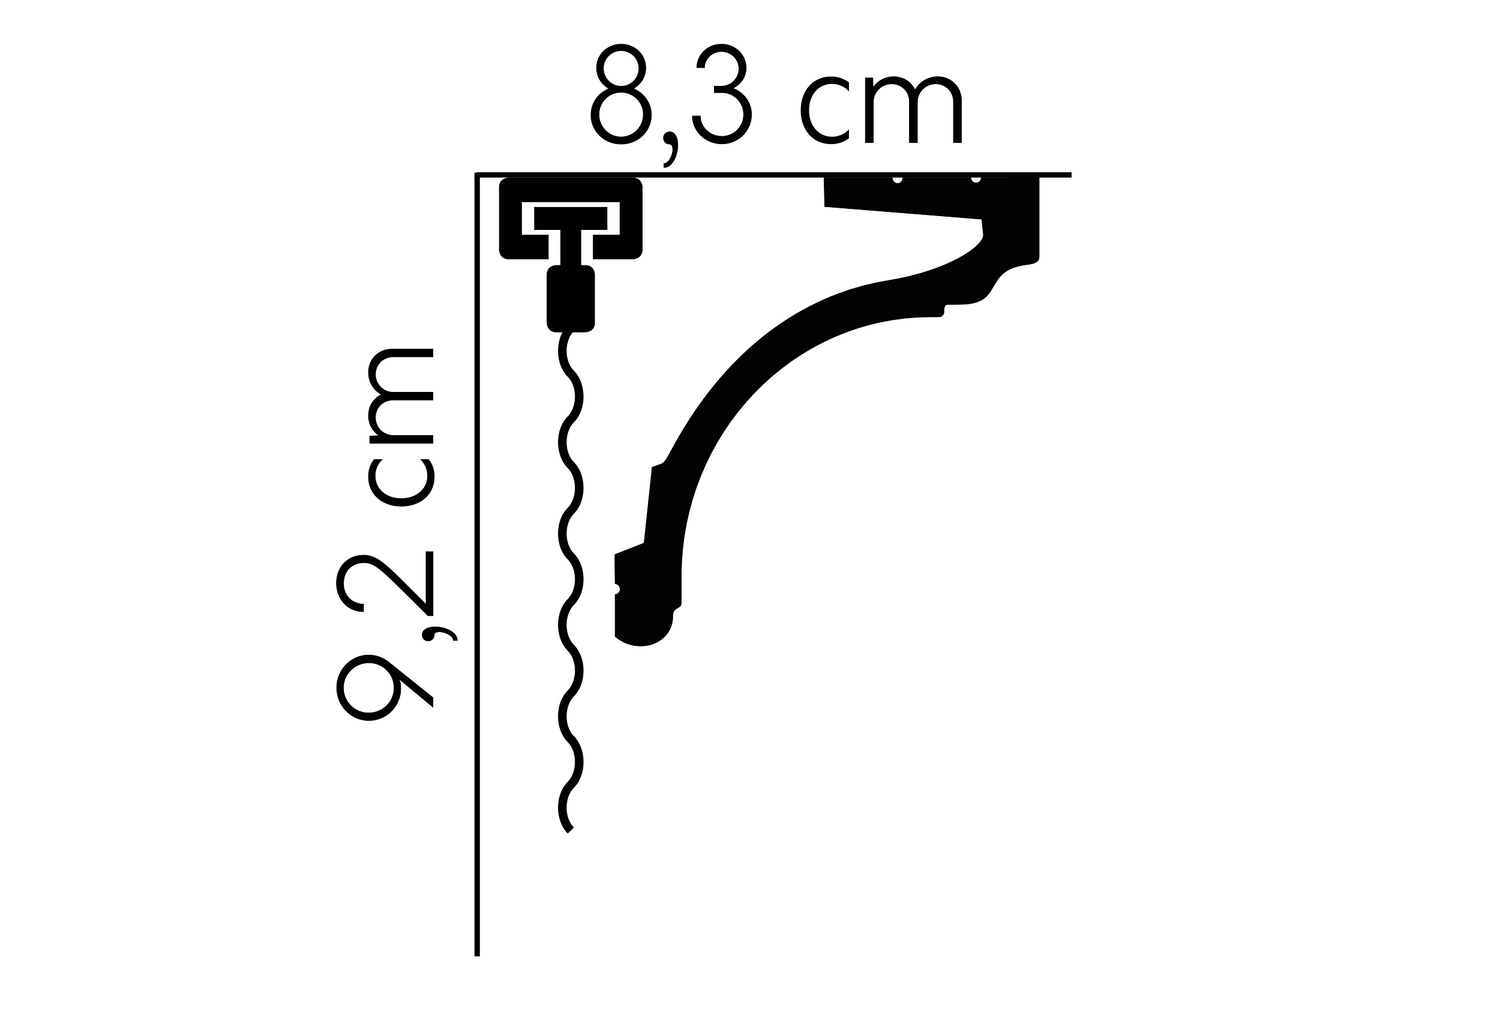 MD161 - Curtain Profile measurements 